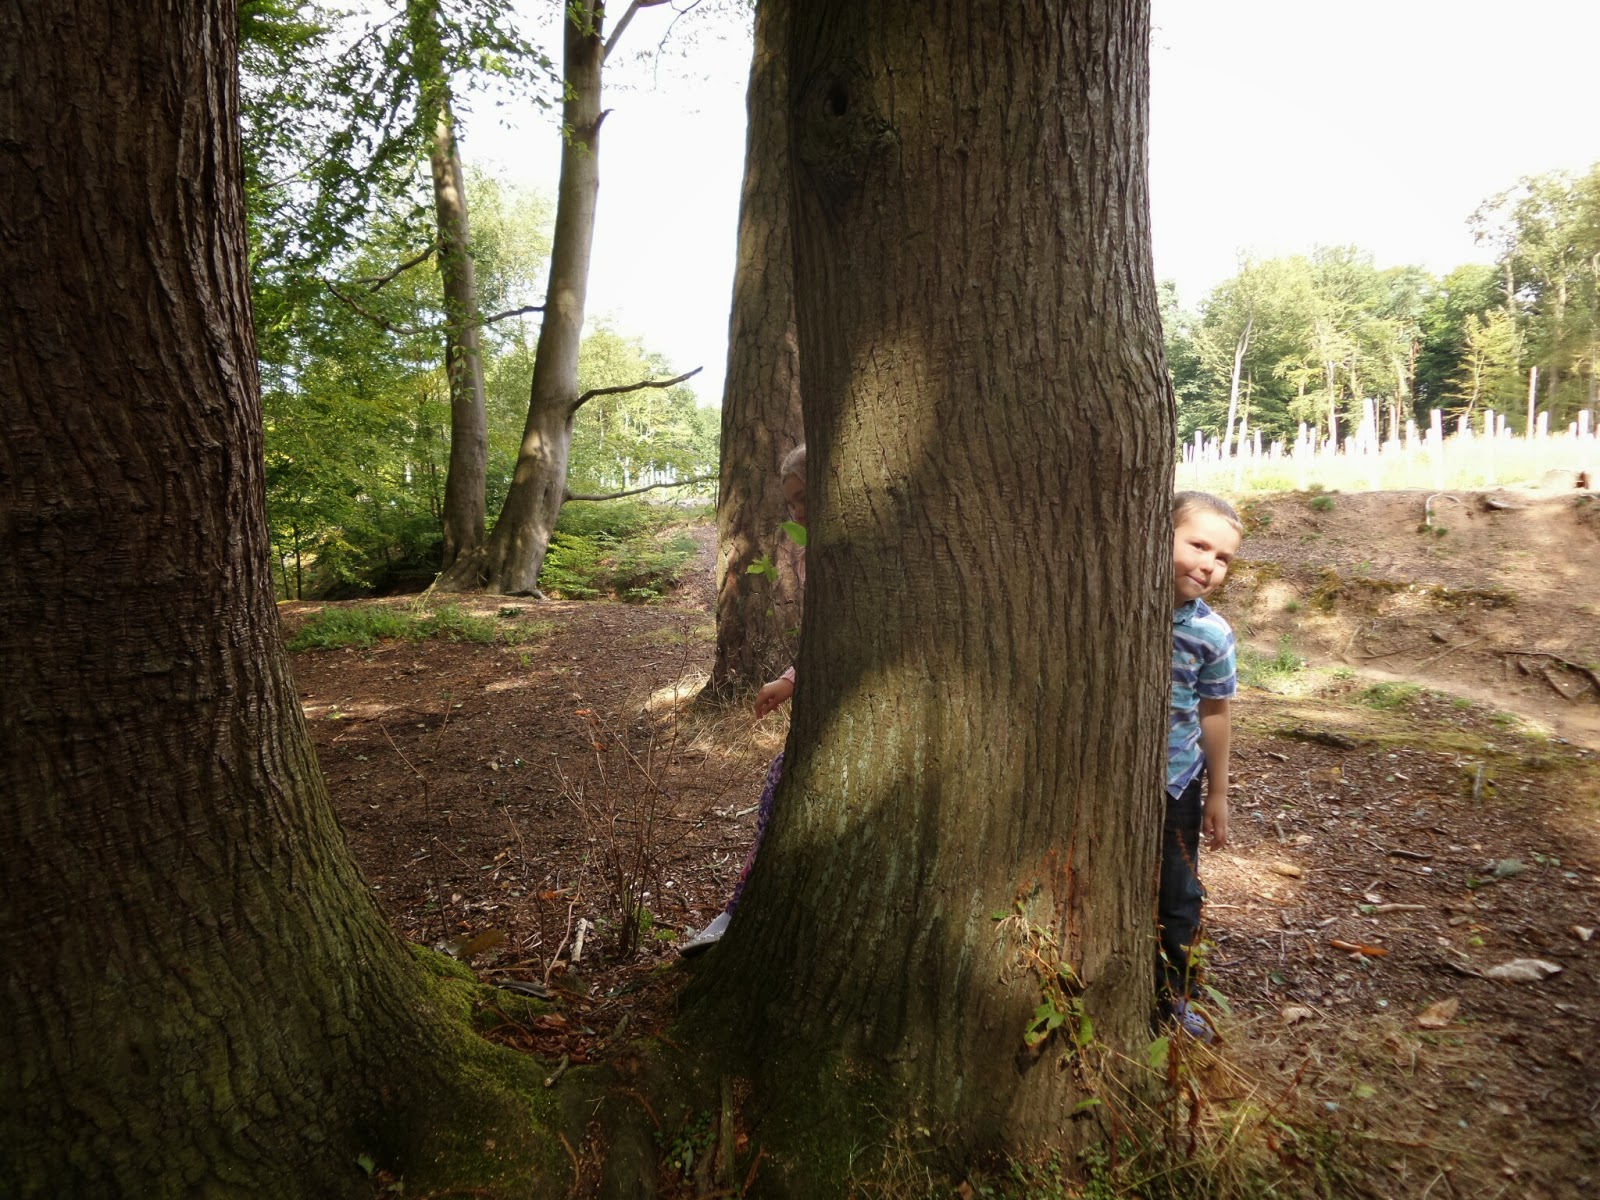 Top Ender and Big Boy hiding behind a Tree